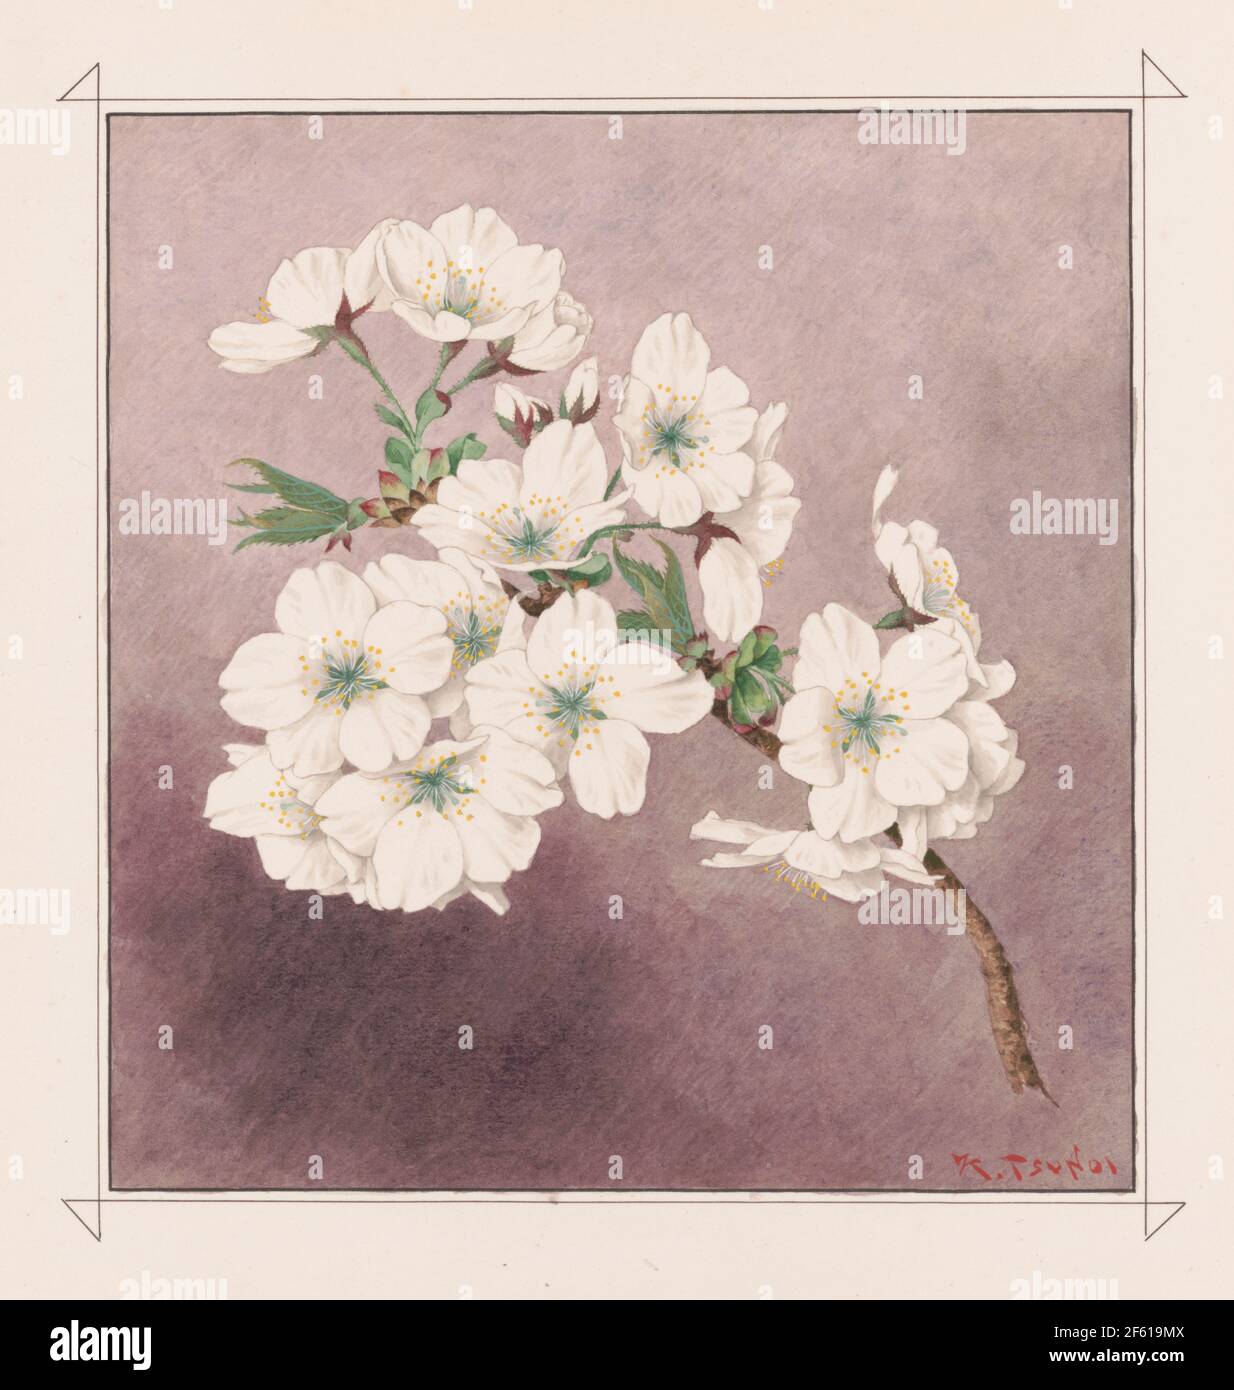 Shirayuki, White Snow Cherry Blossoms Stock Photo